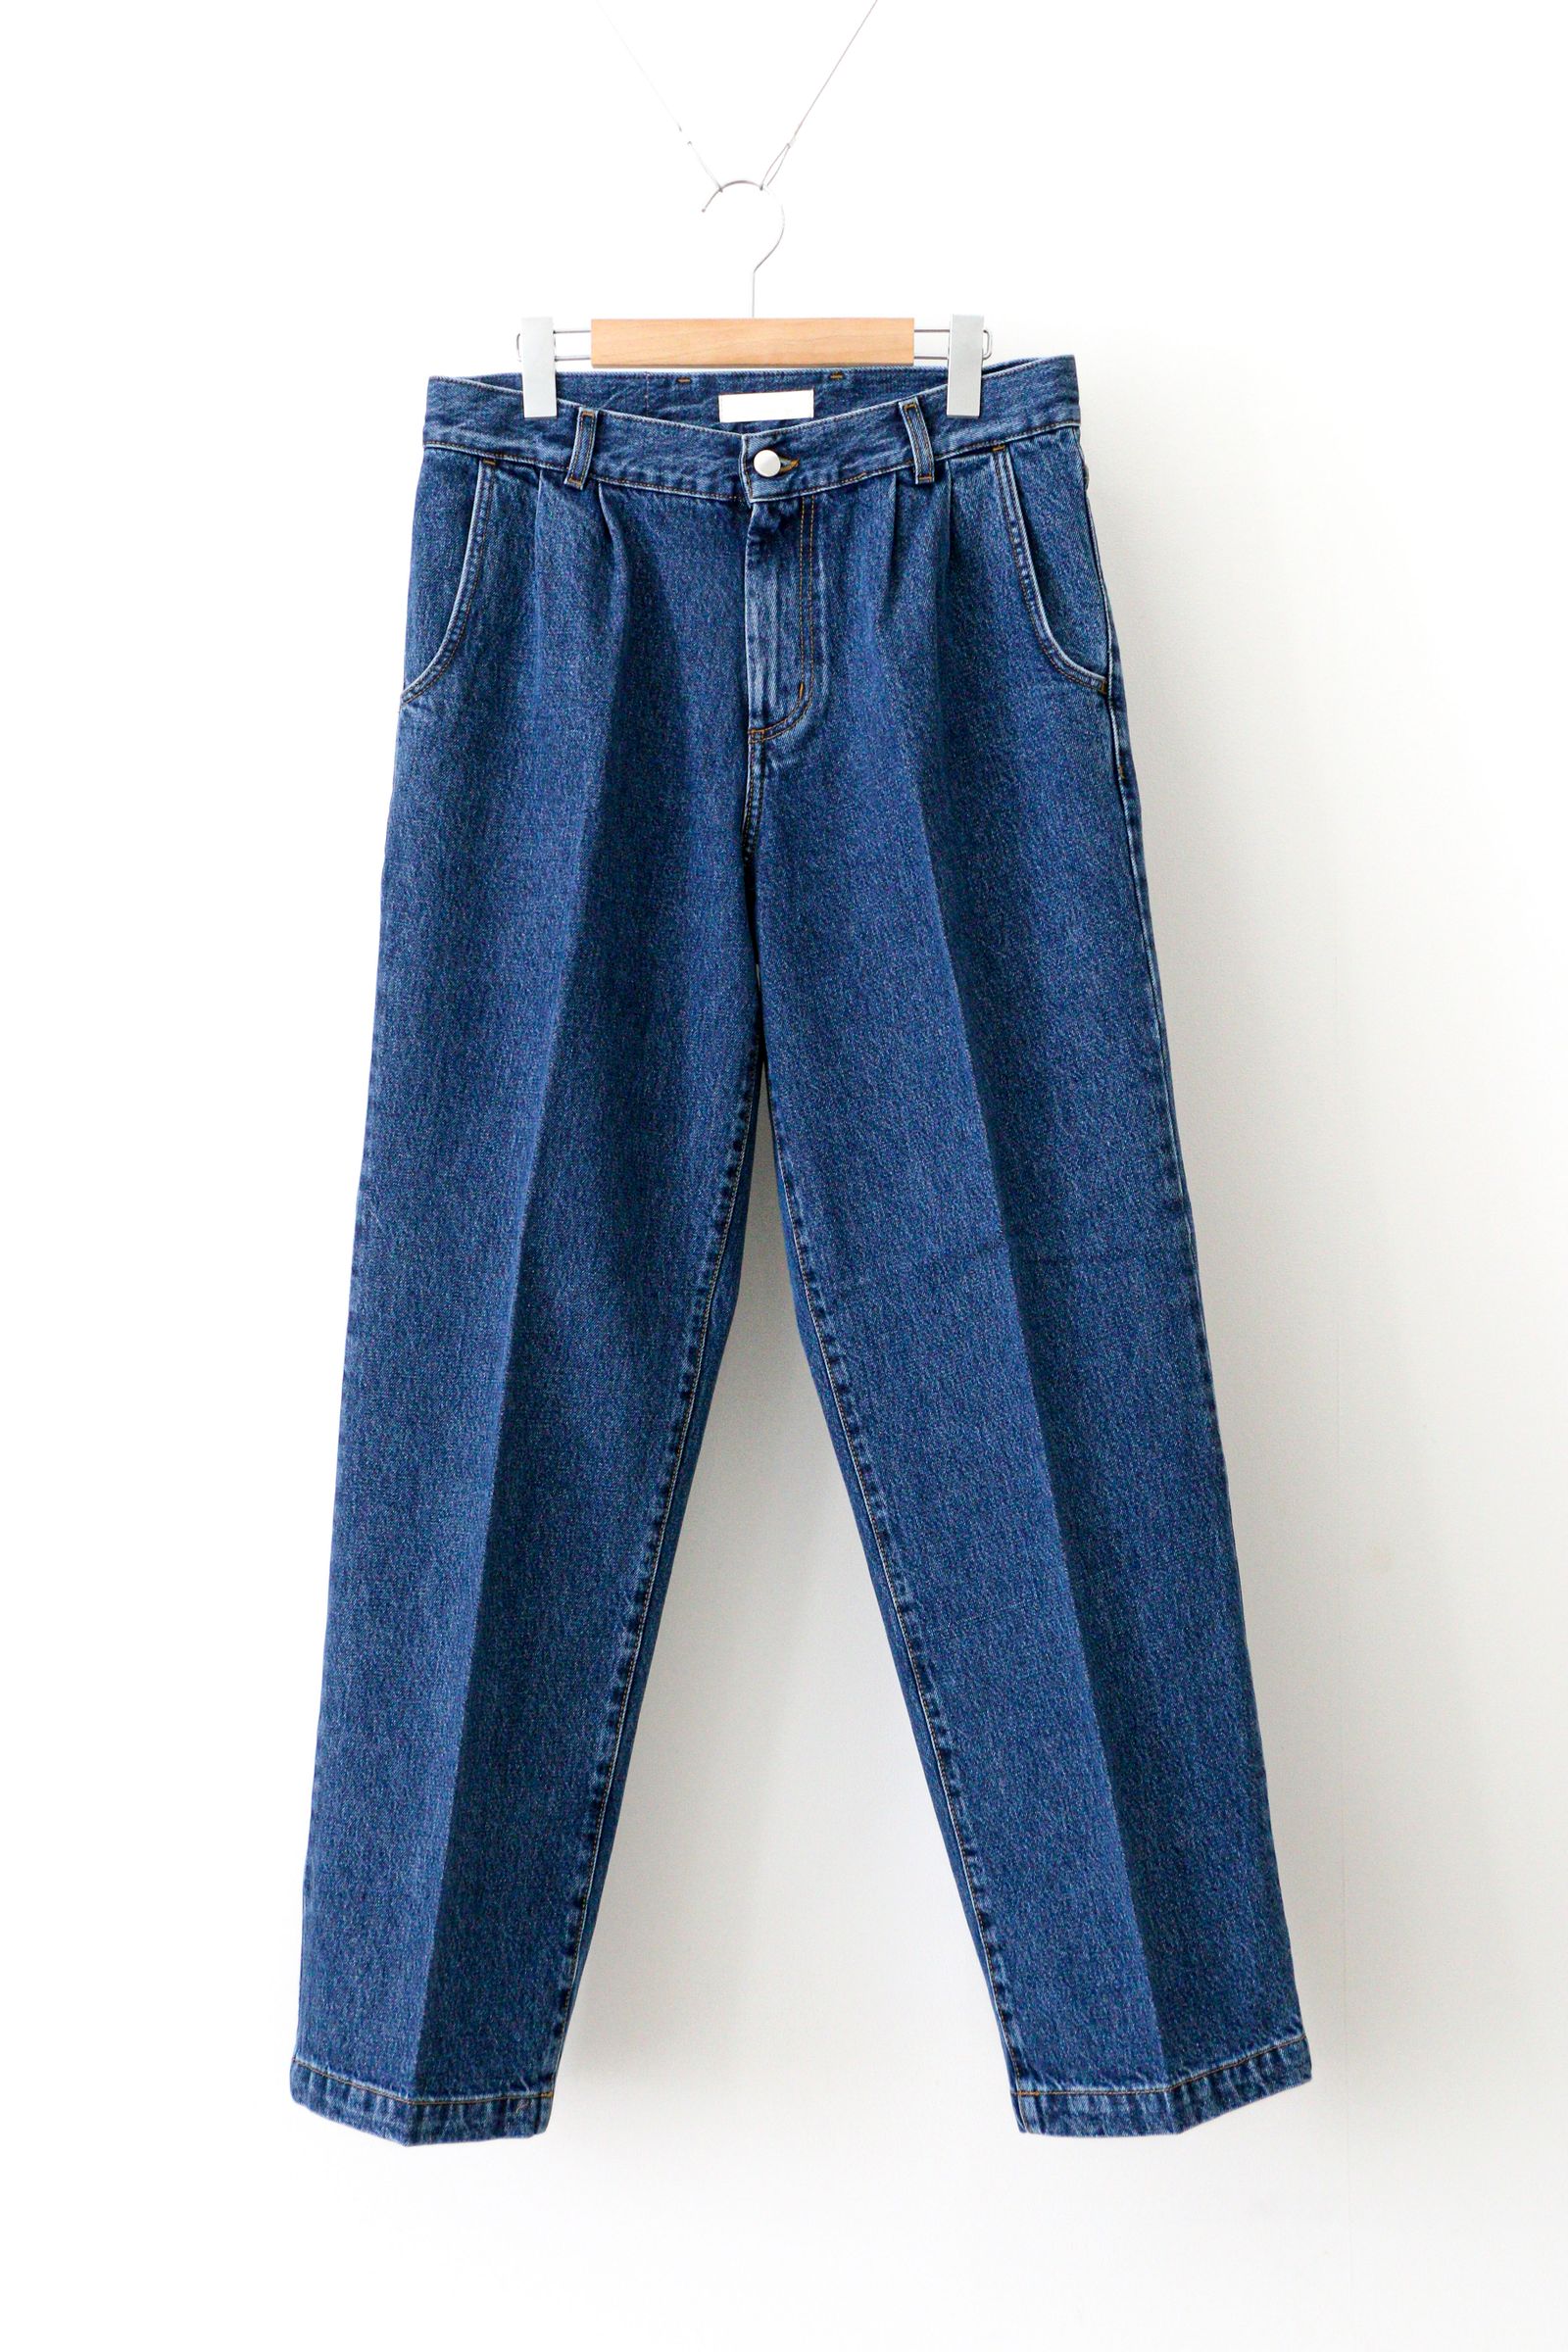 mfpen - Big Jeans Washed Blue | koko